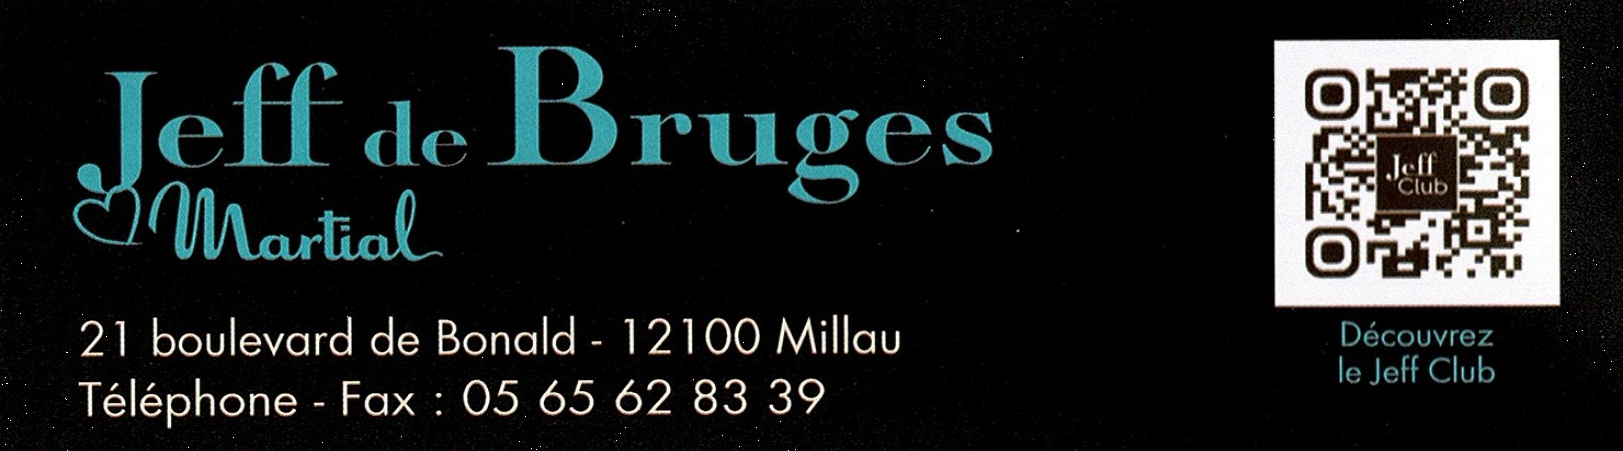 Jeff de Bruges Millau